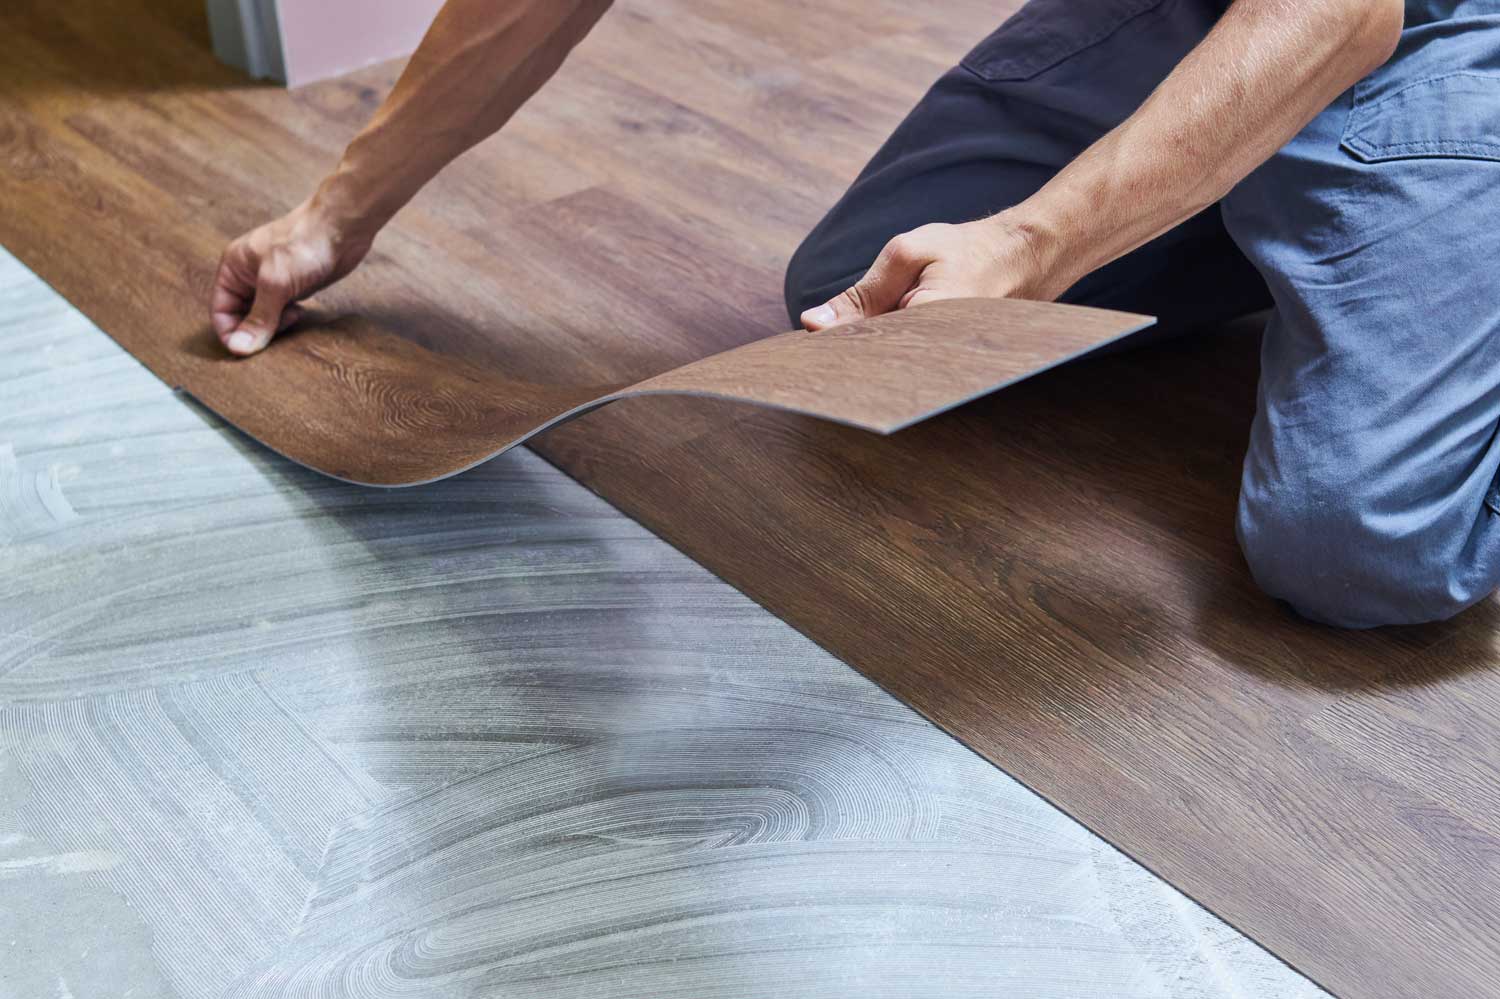 A Footprints Floors professional installs laminate flooring in a home.